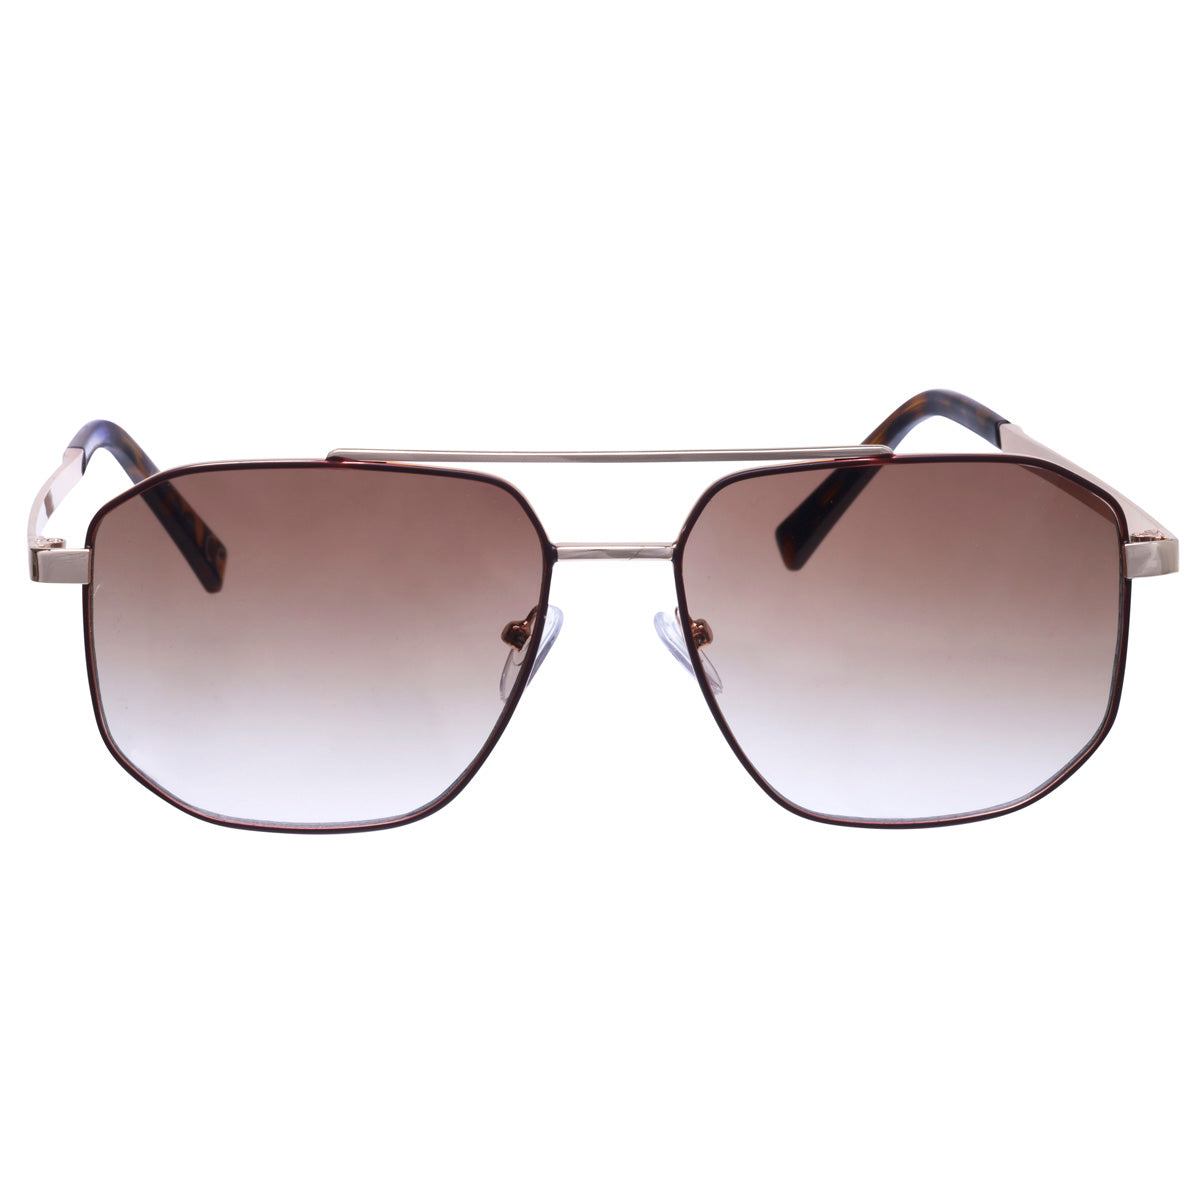 Angled aviator sunglasses with metal frames